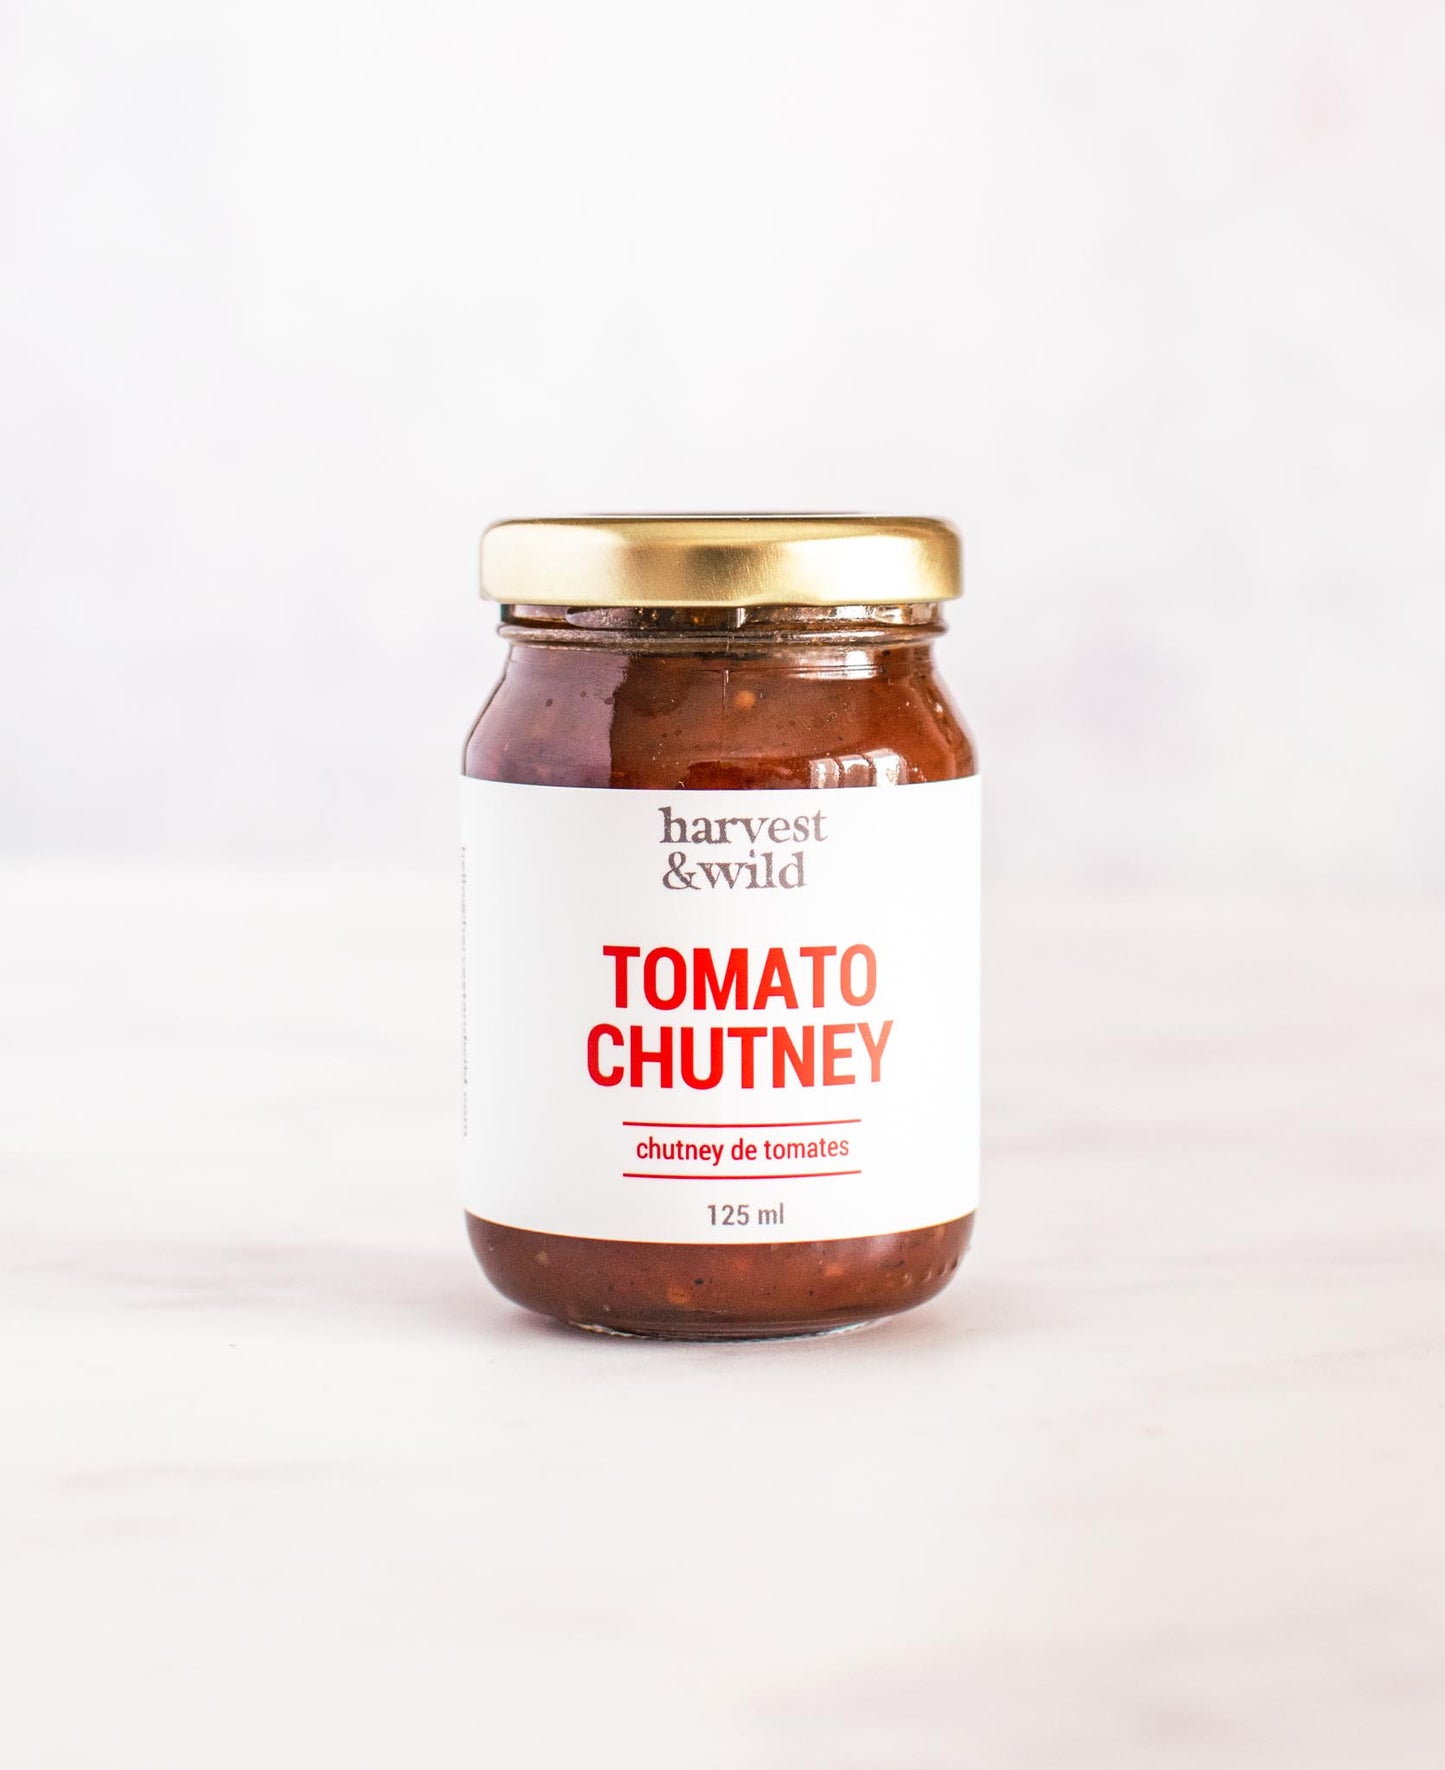 Tomato Chutney in 125ml glass jar